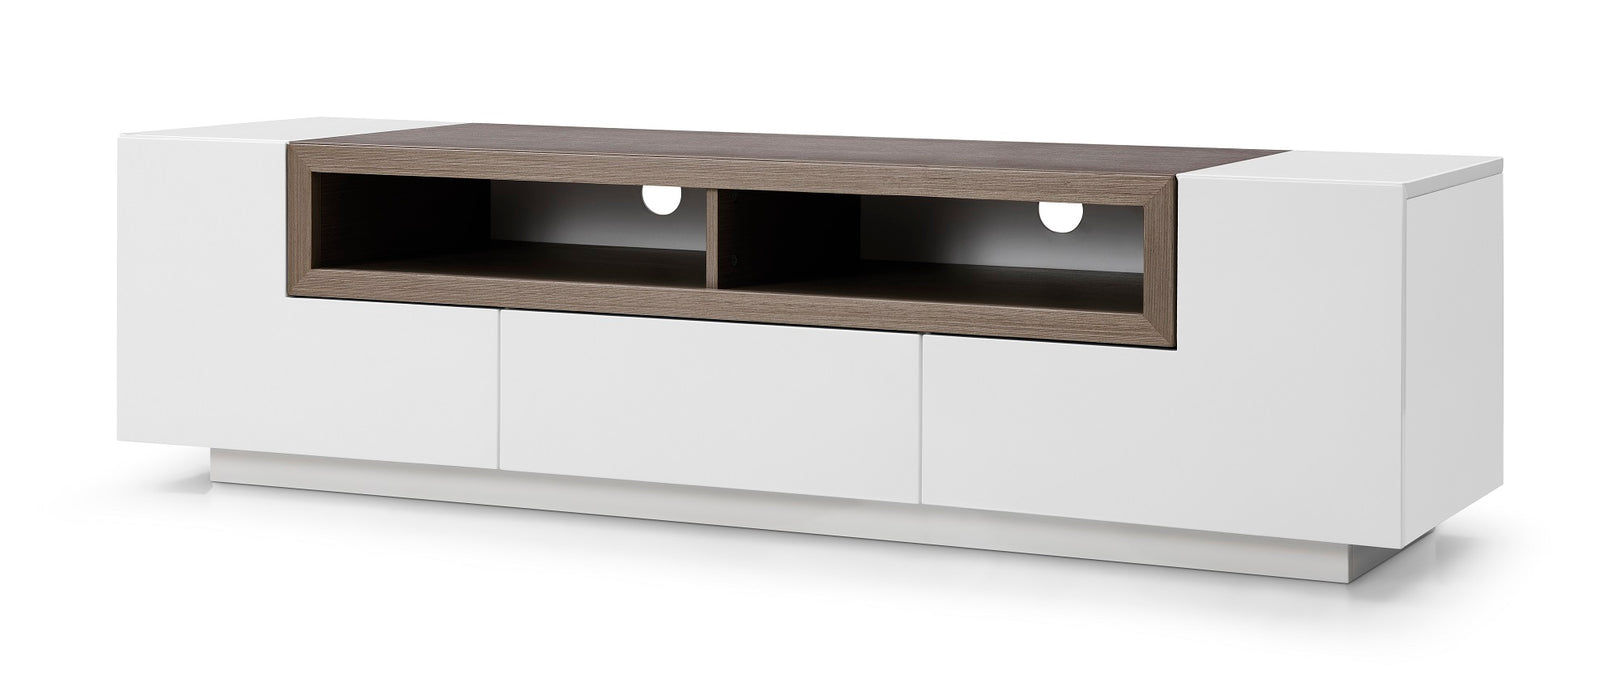 J&M Furniture - TV002 White High Gloss with Grey Veneer TV stand - 1763940